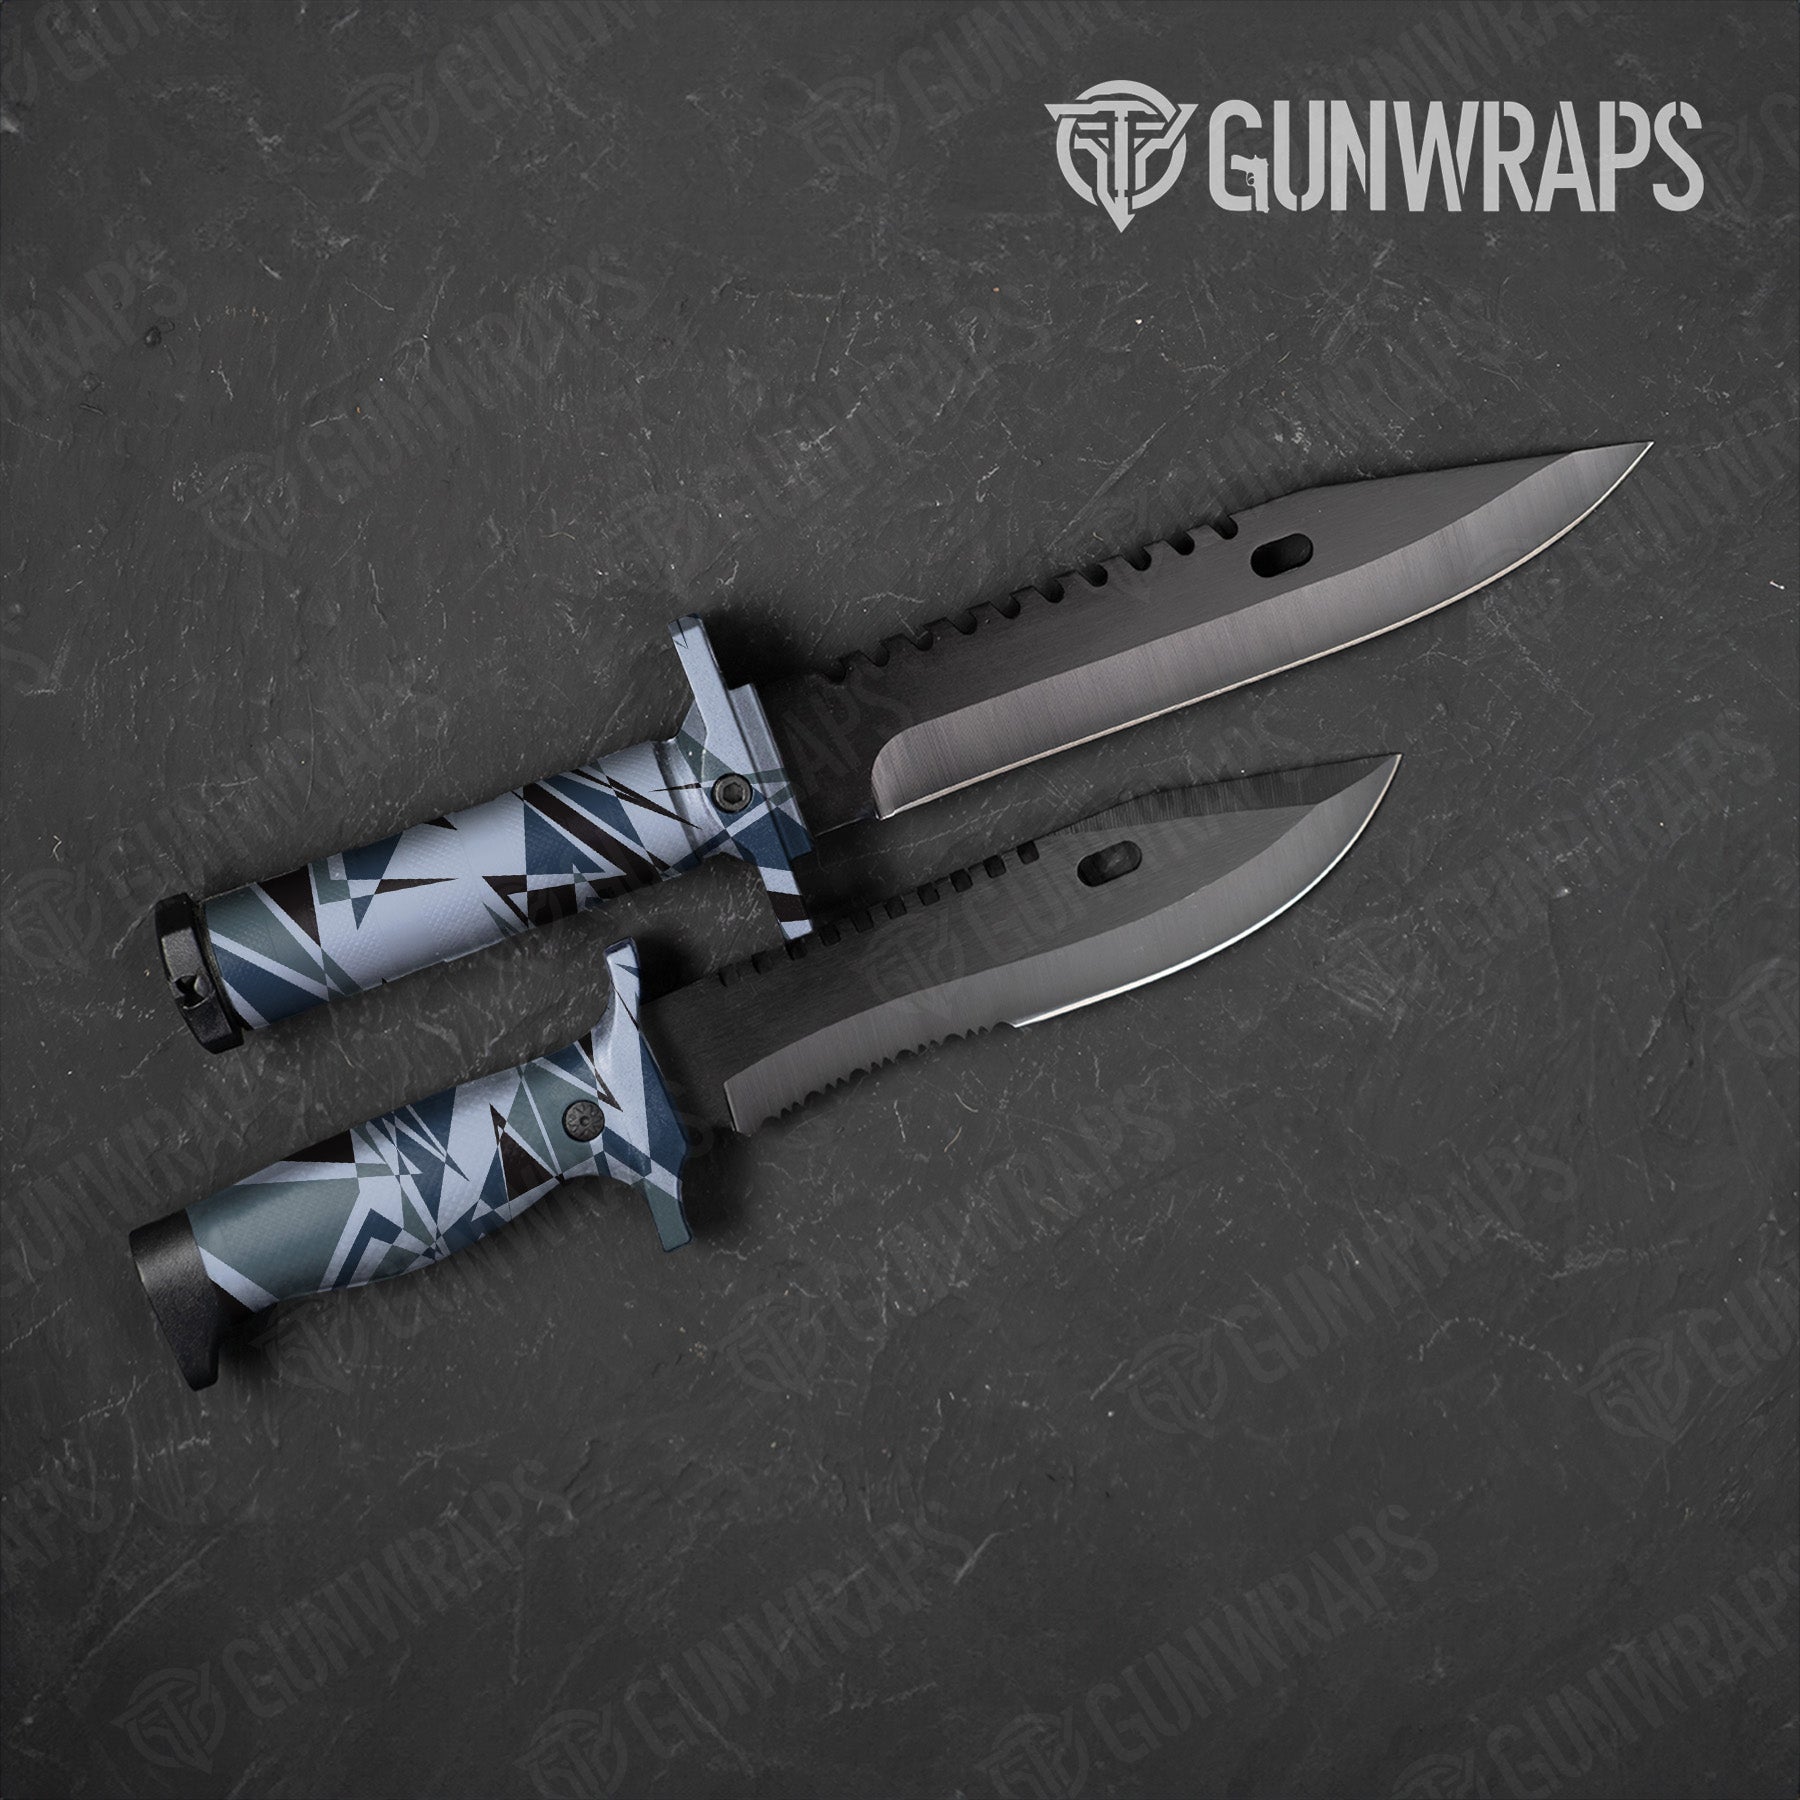 Sharp Navy Camo Knife Gear Skin Vinyl Wrap